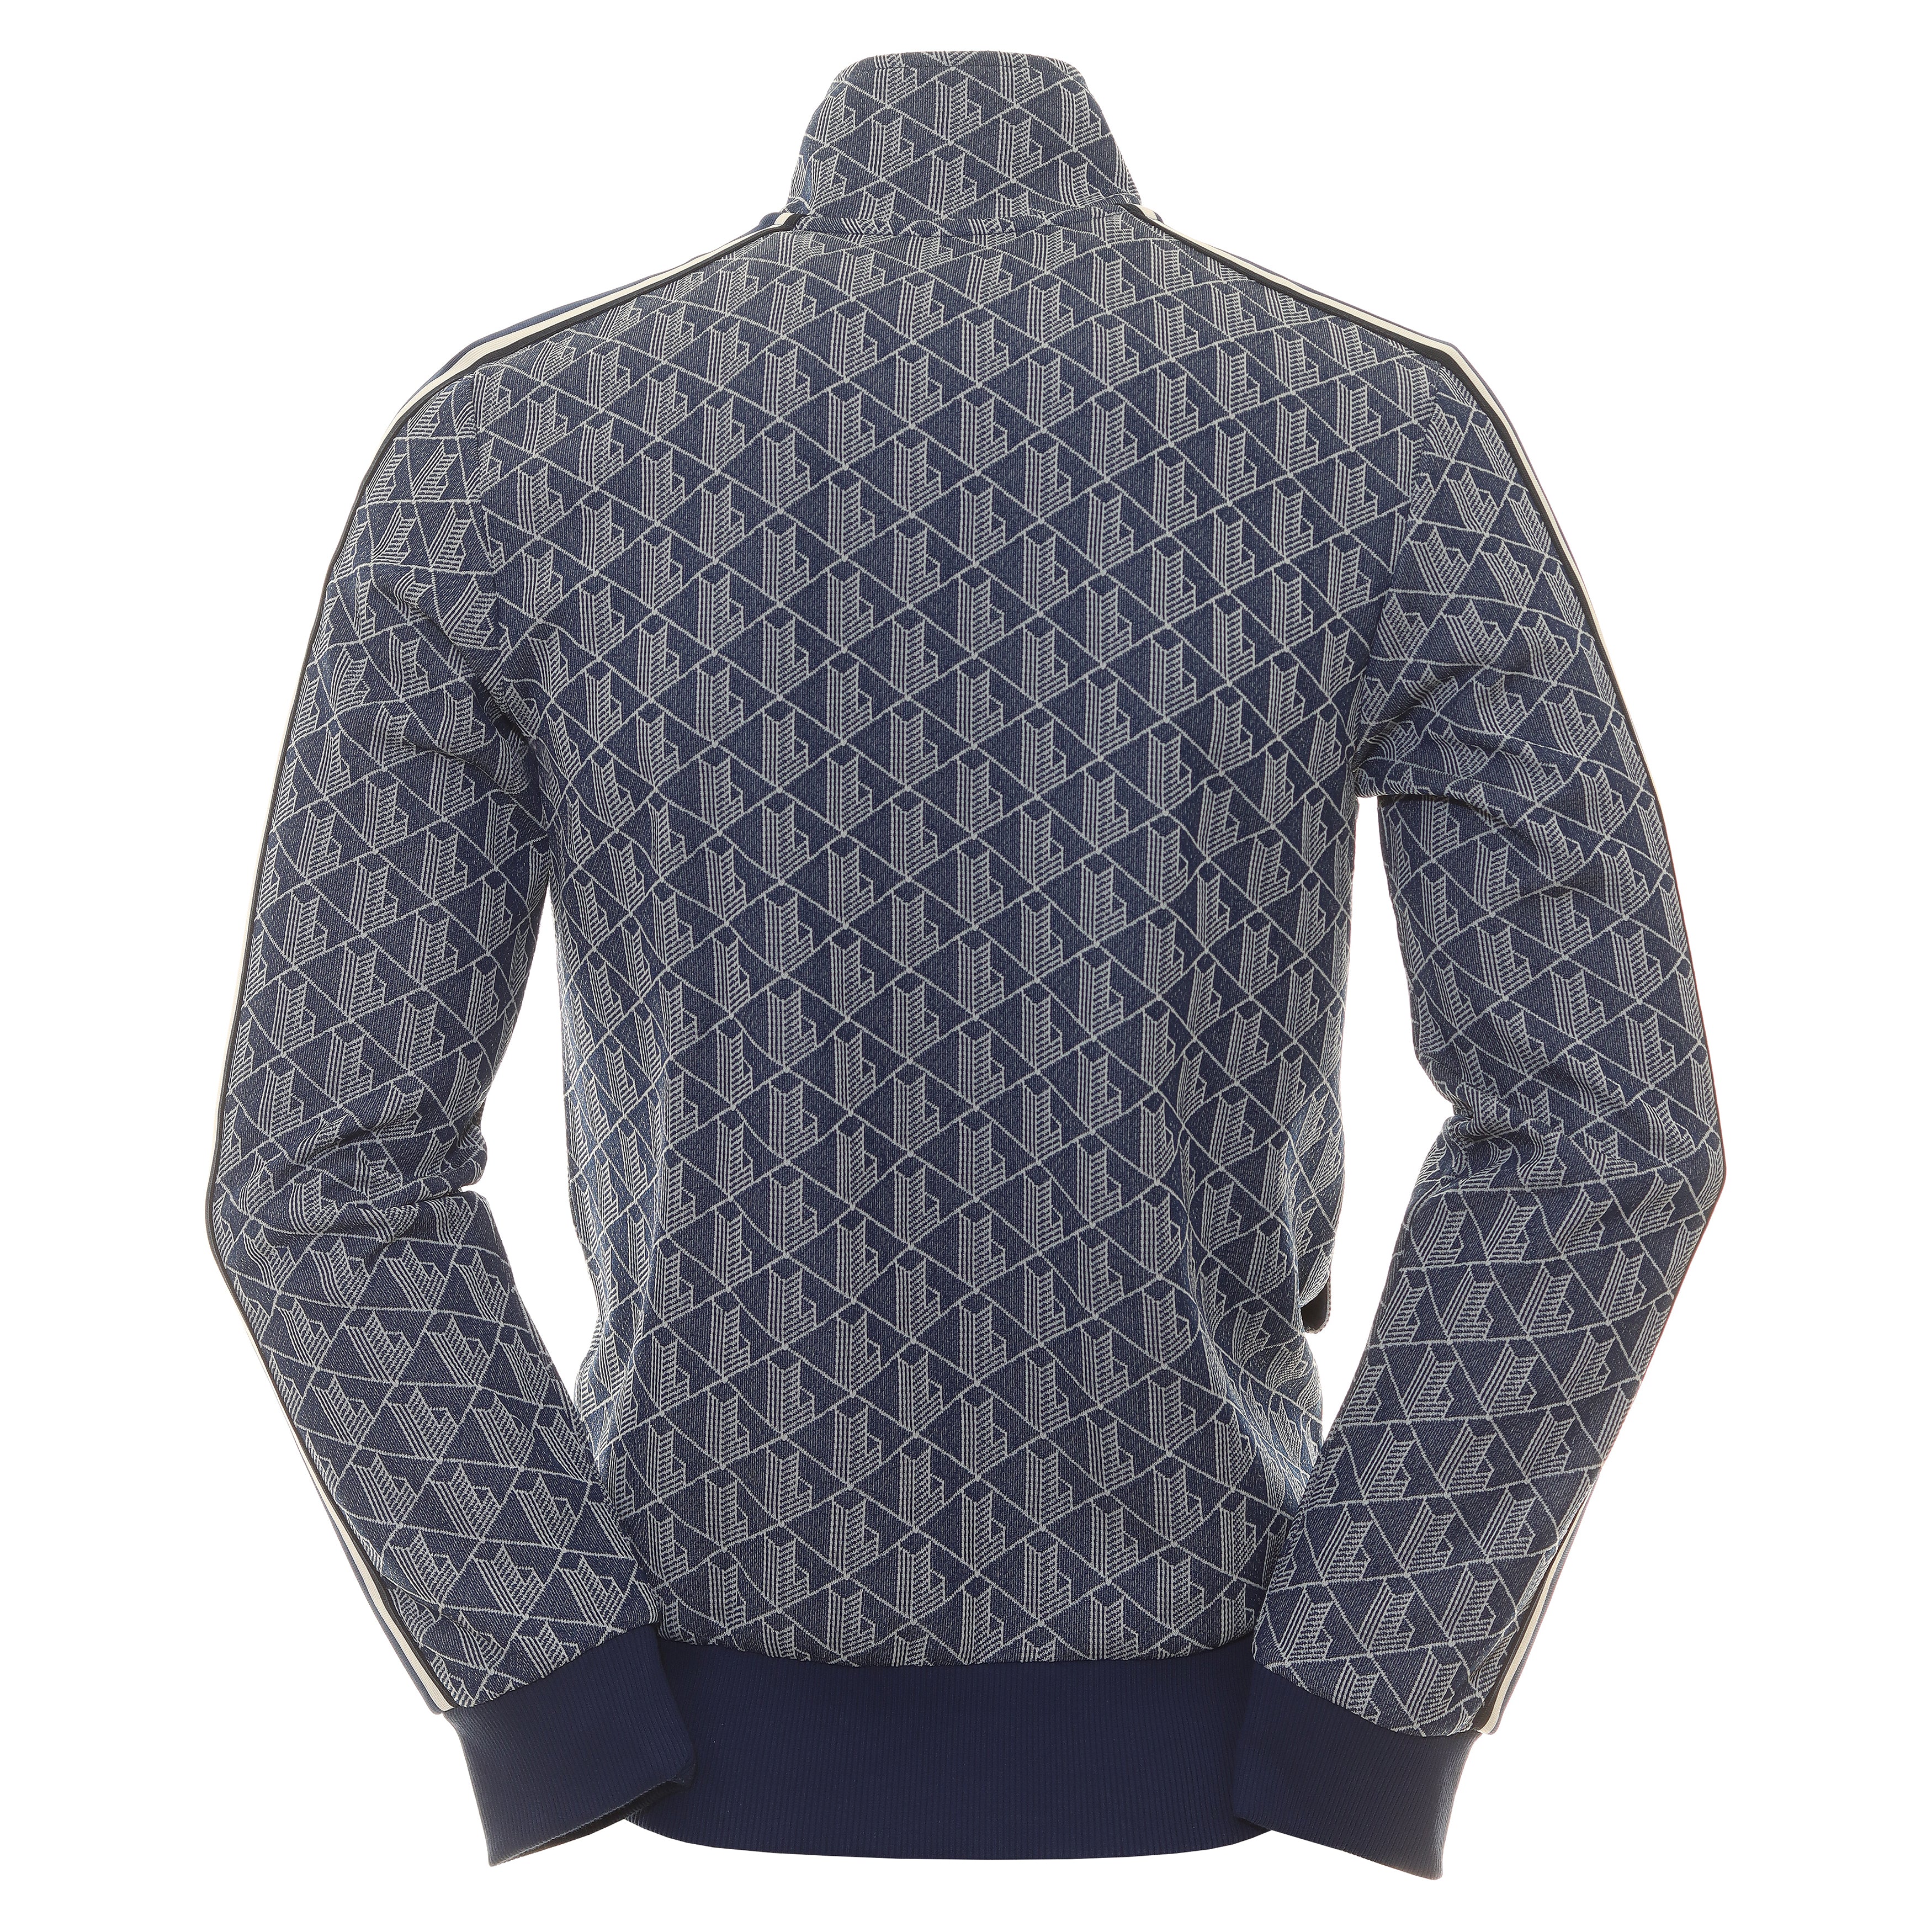 Lacoste Paris Jacquard Monogram Zipped Sweatshirt Navy Blue / White for Men